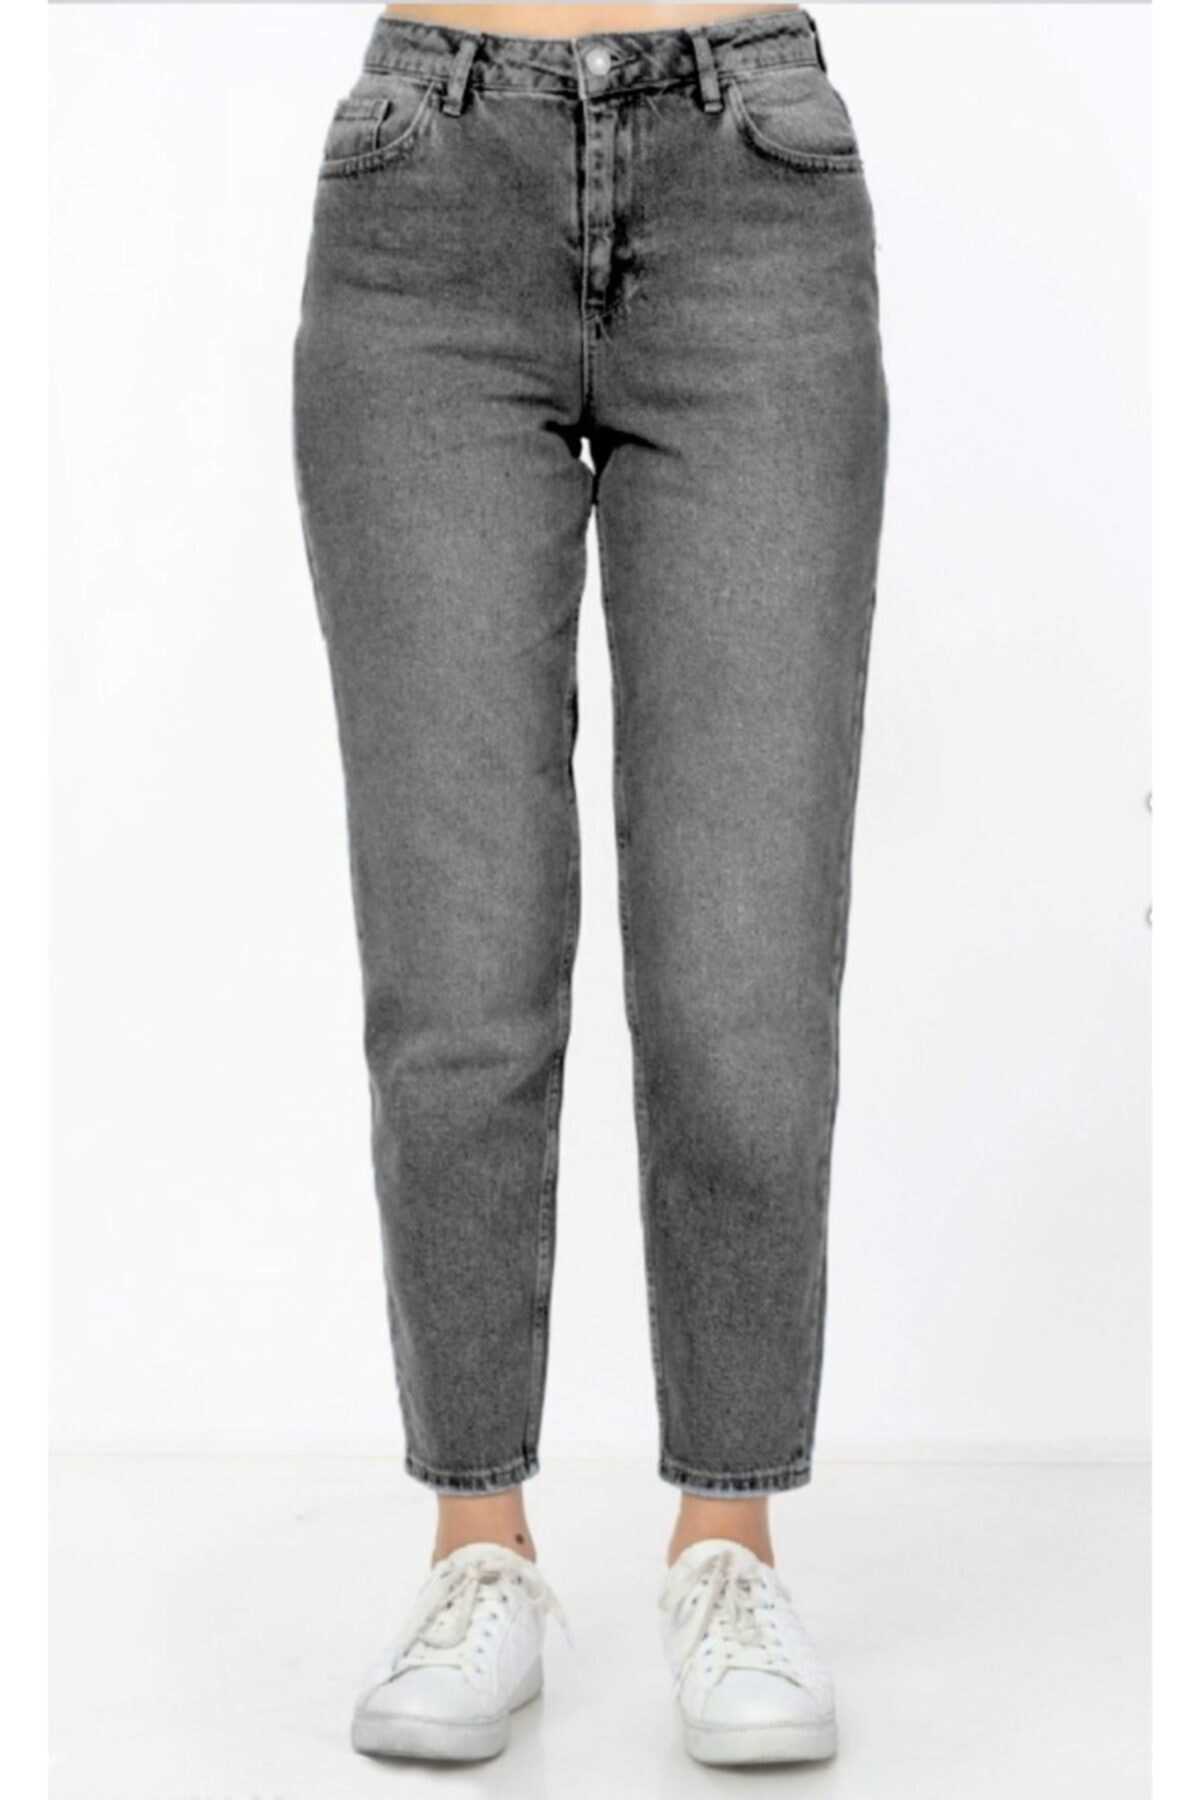 High Waist Pants Boy Friend WIDE LEG Jeans for Women Mom Jeans G0115